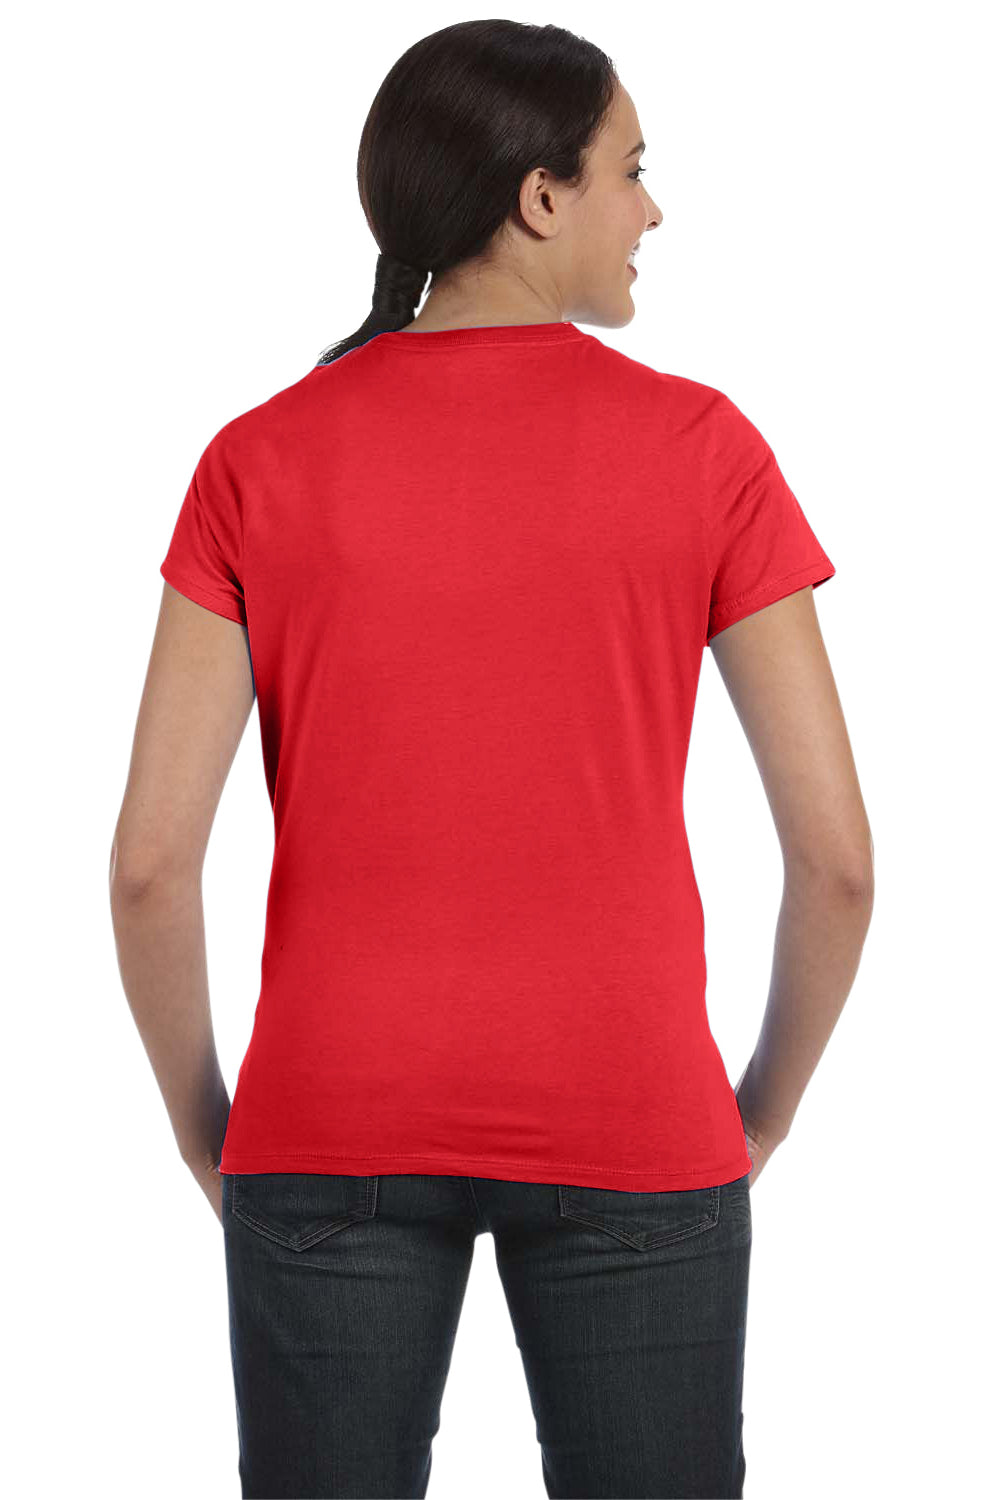 Hanes SL04 Nano-T Short Sleeve Crewneck T-Shirt Athletic Red Back